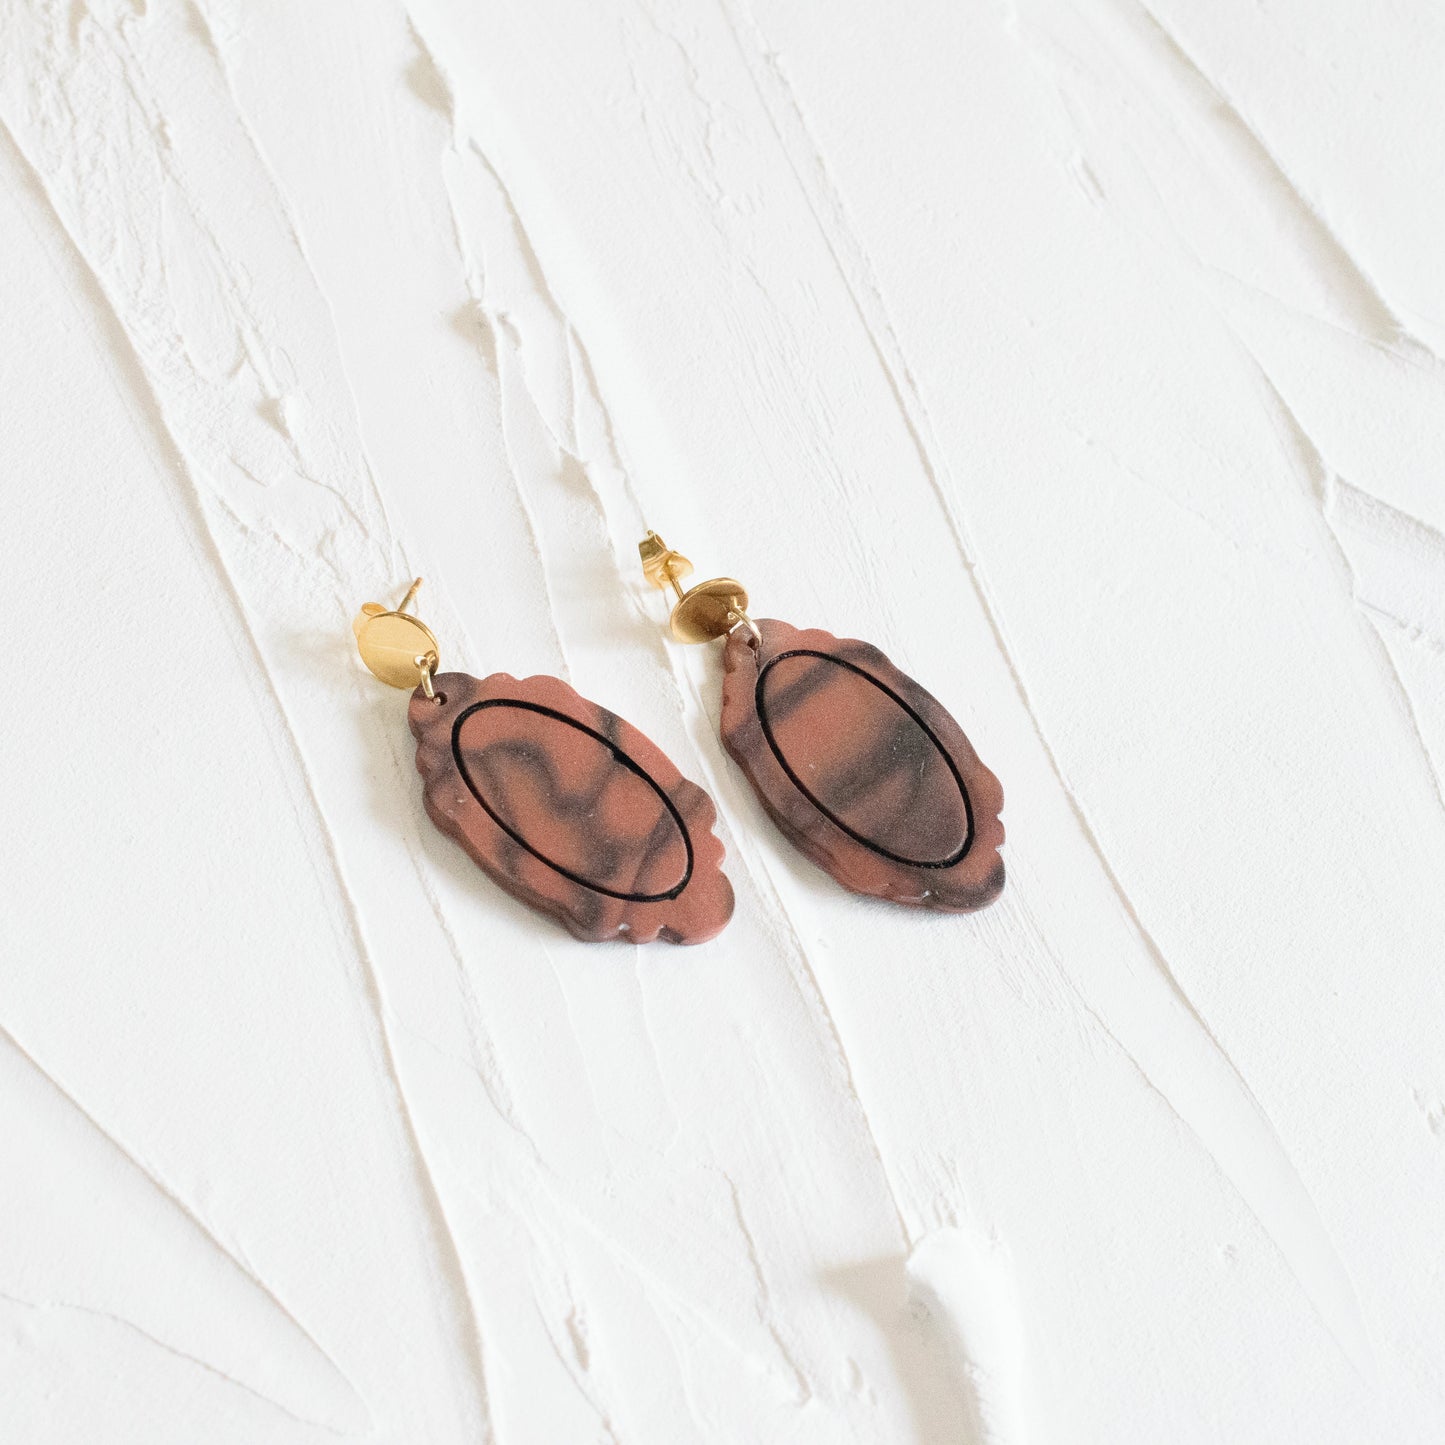 Vintage Oval Framed Marble Earrings - Rust Red - Claymore NZ-Earrings